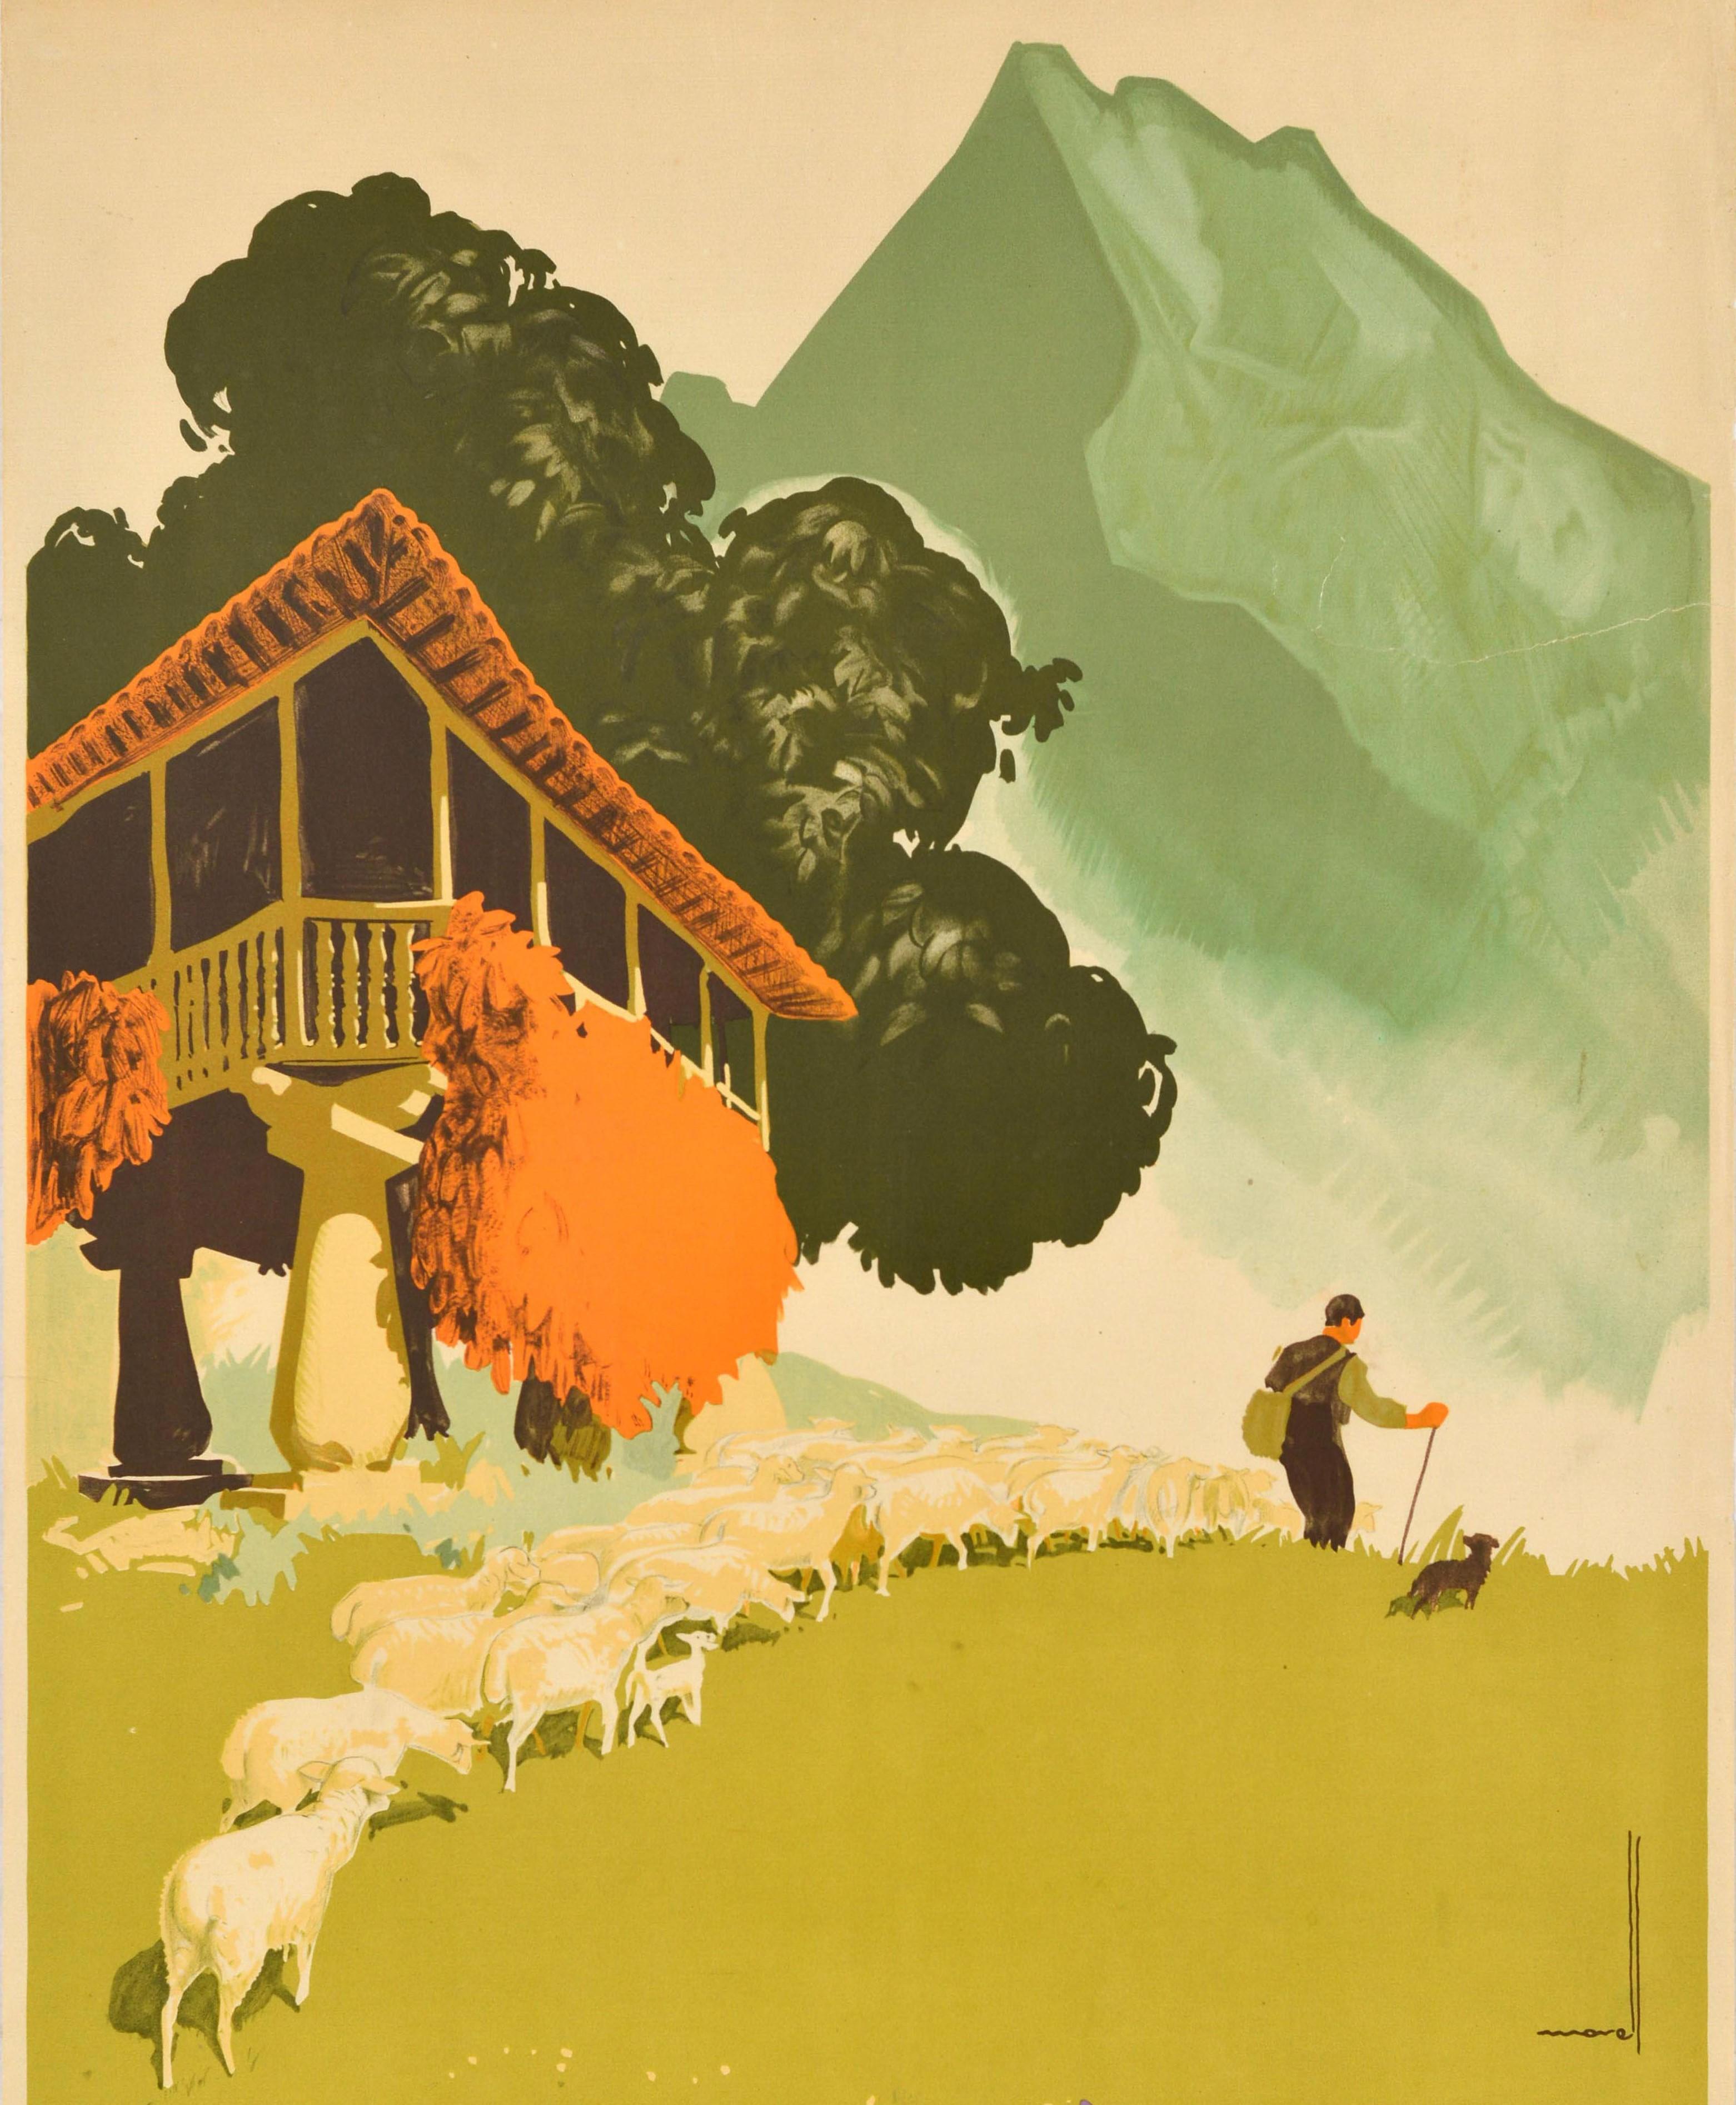 Spanish Original Vintage Travel Poster Asturias Spain Cantabrian Mountains Shepherd Art For Sale